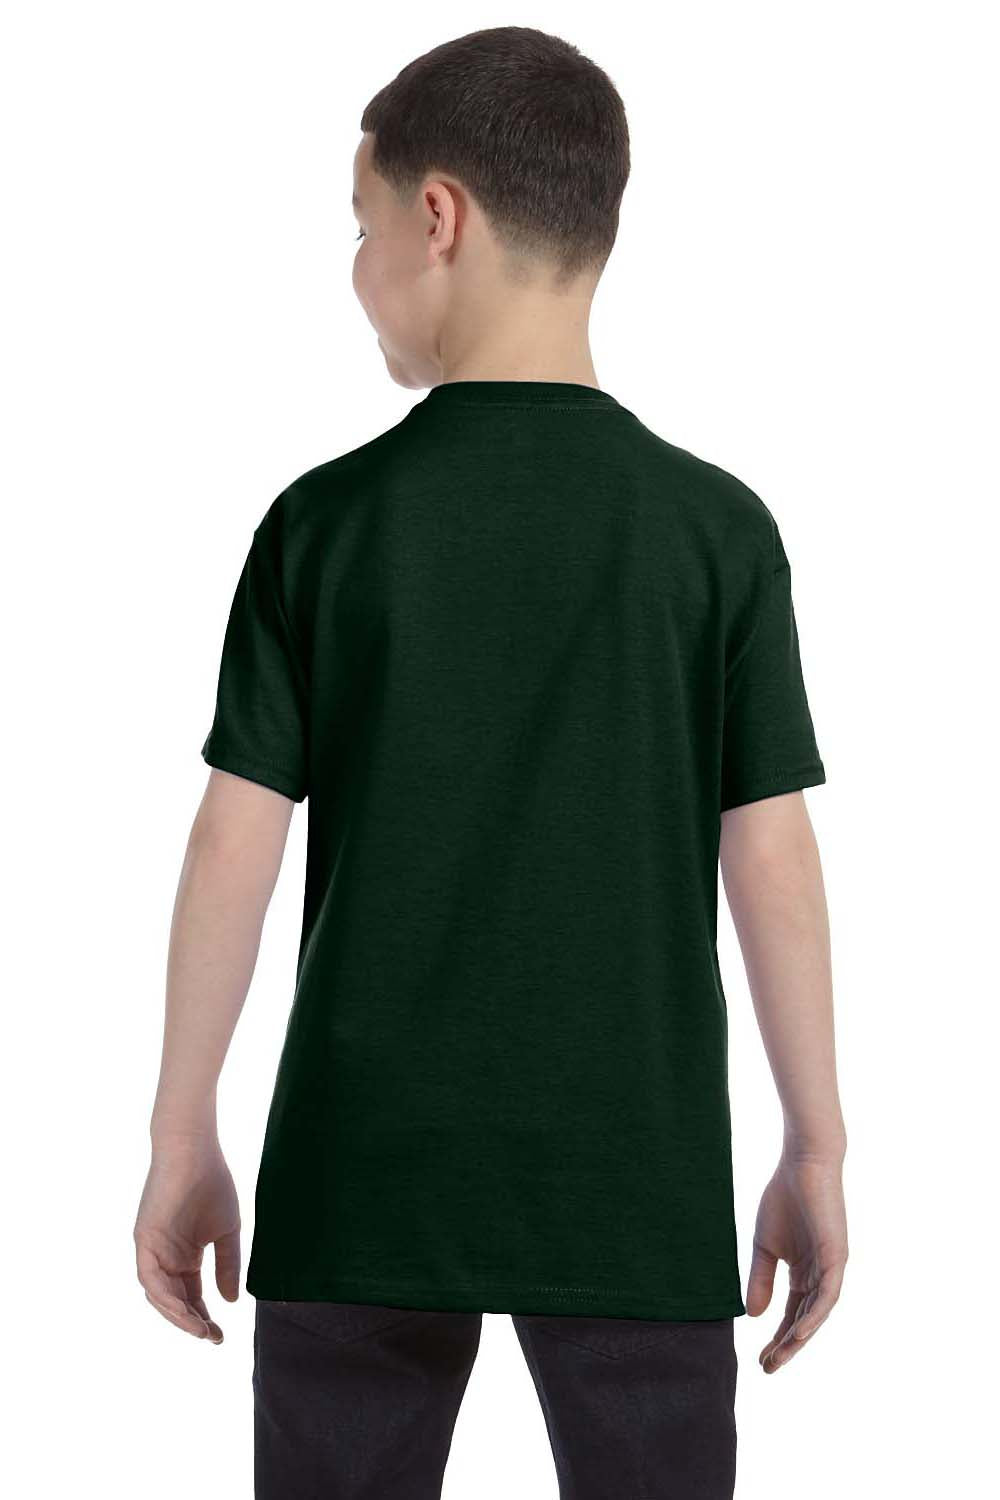 Jerzees 29B Youth Dri-Power Moisture Wicking Short Sleeve Crewneck T-Shirt Forest Green Back